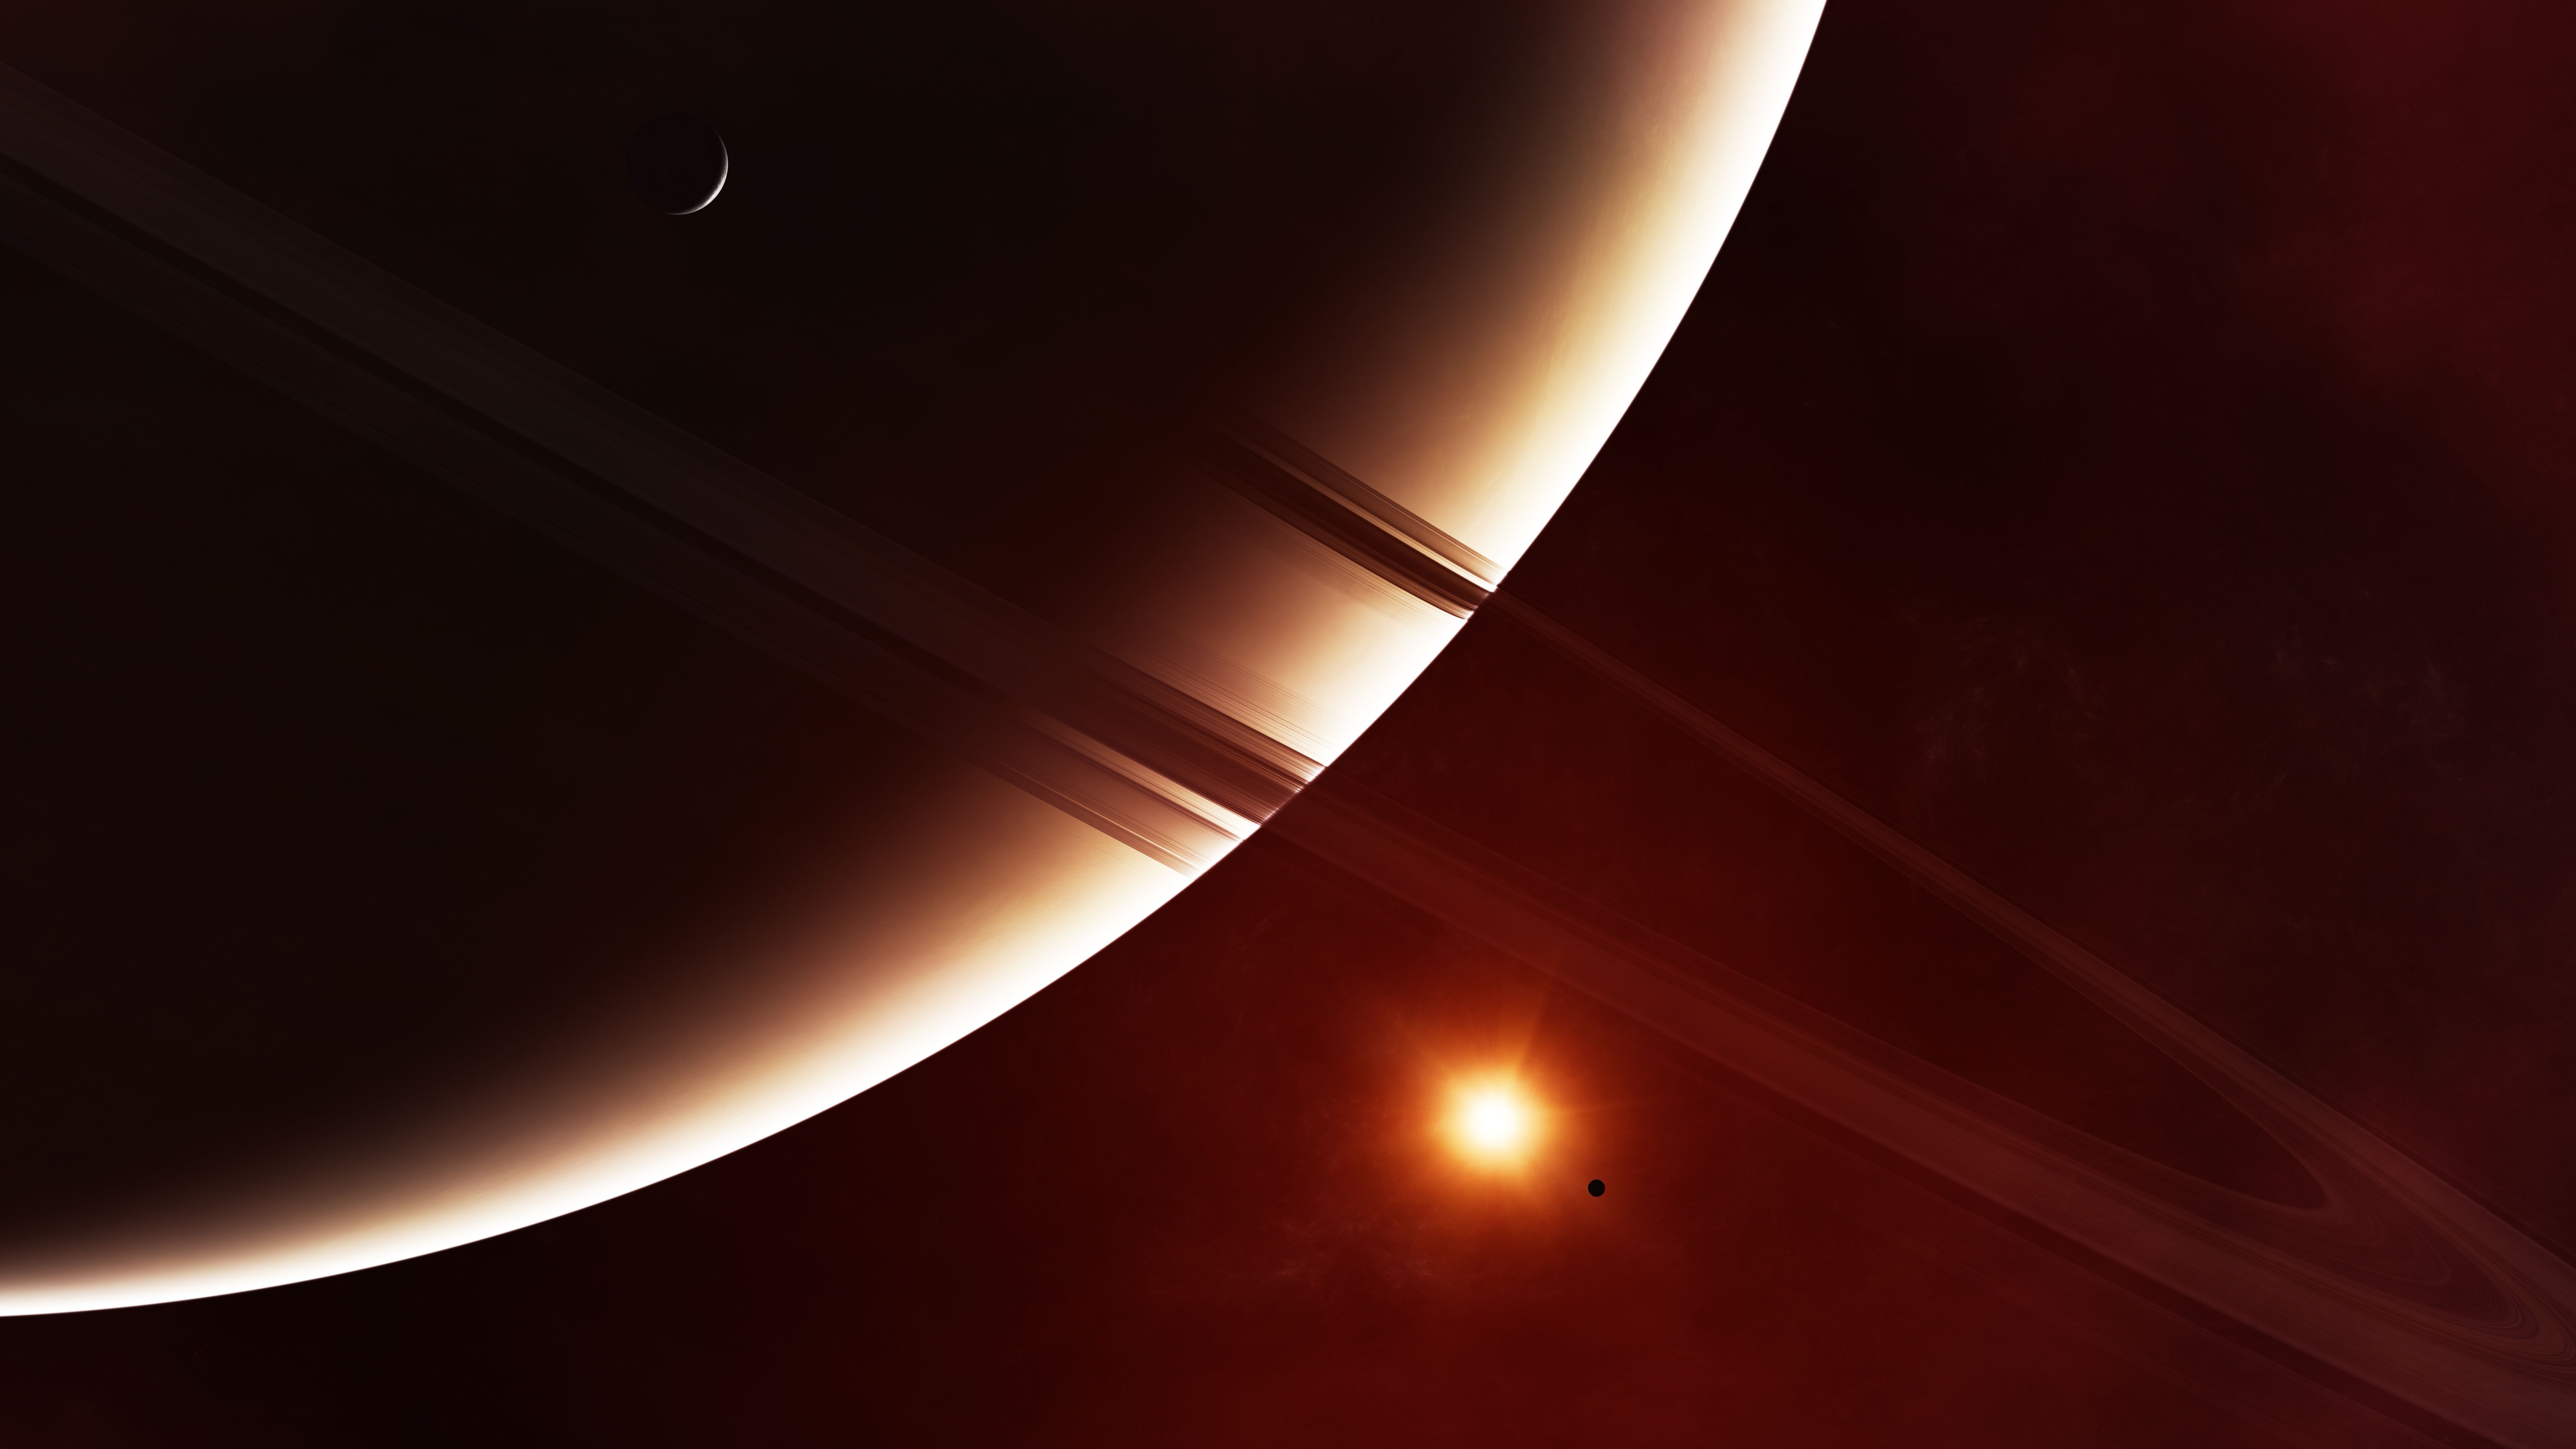 7680x4320 Planets Ring 8k 8k Hd 4k Wallpaper Image Background